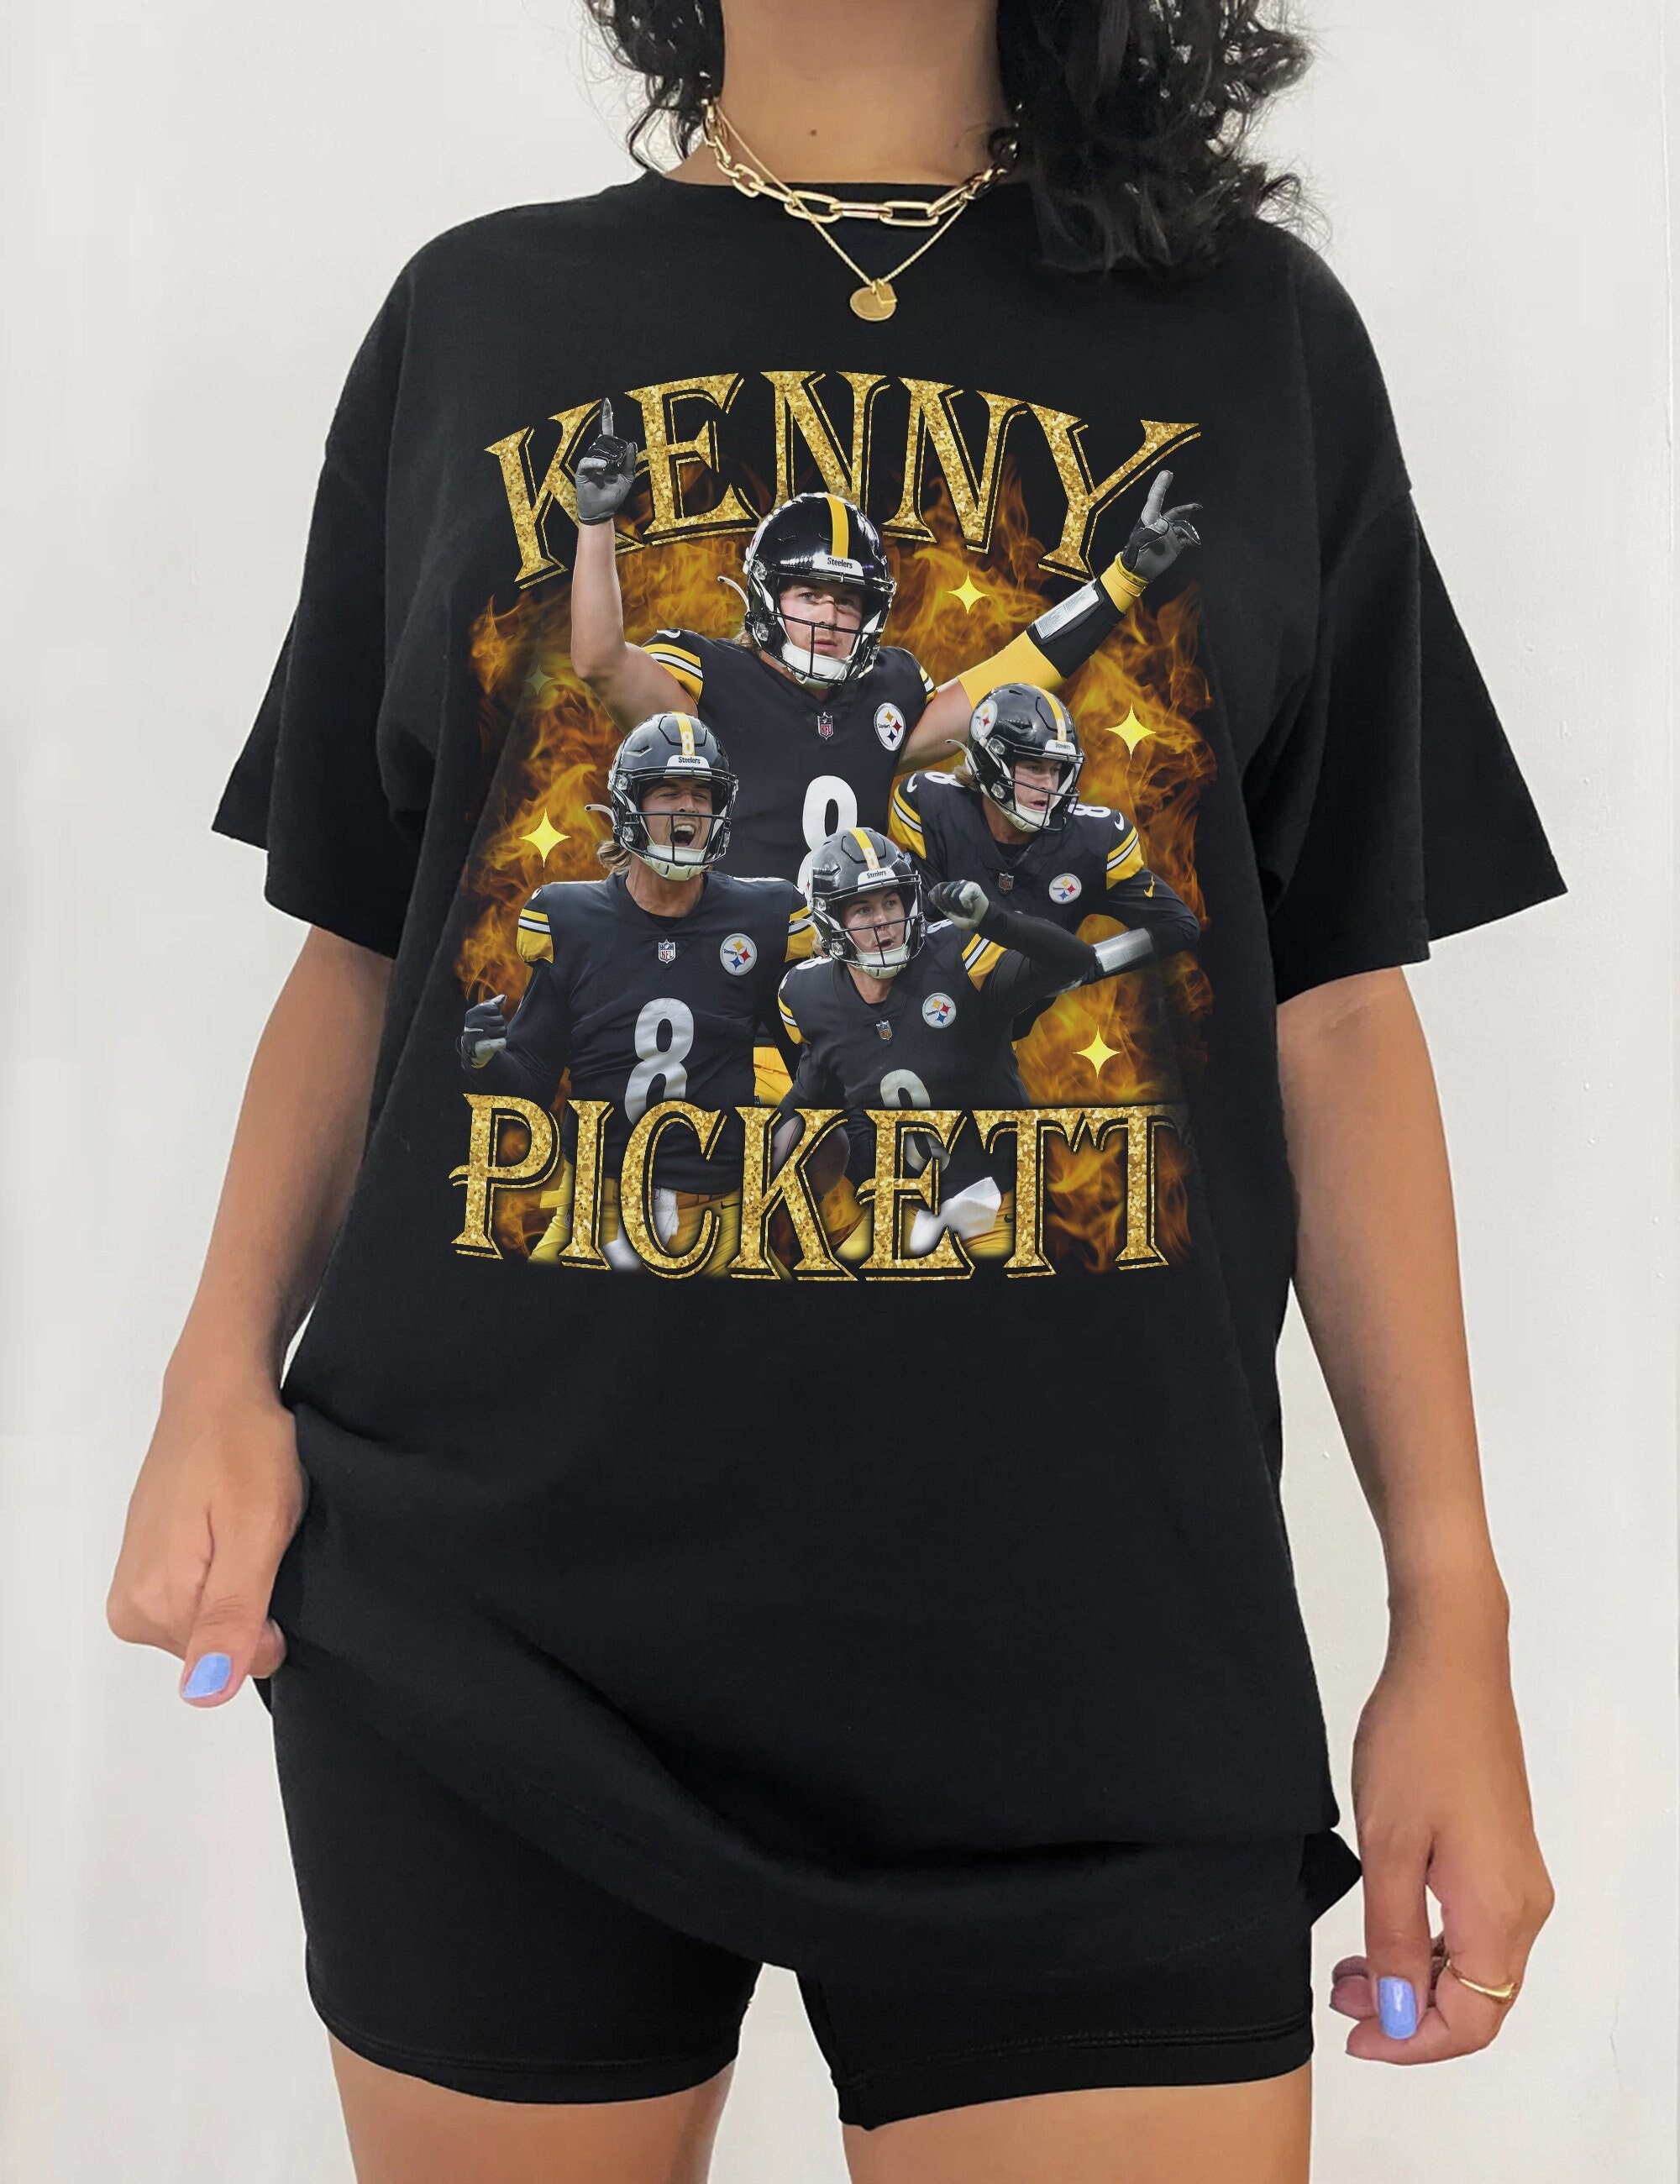 Discover Kenny Pickett Shirt